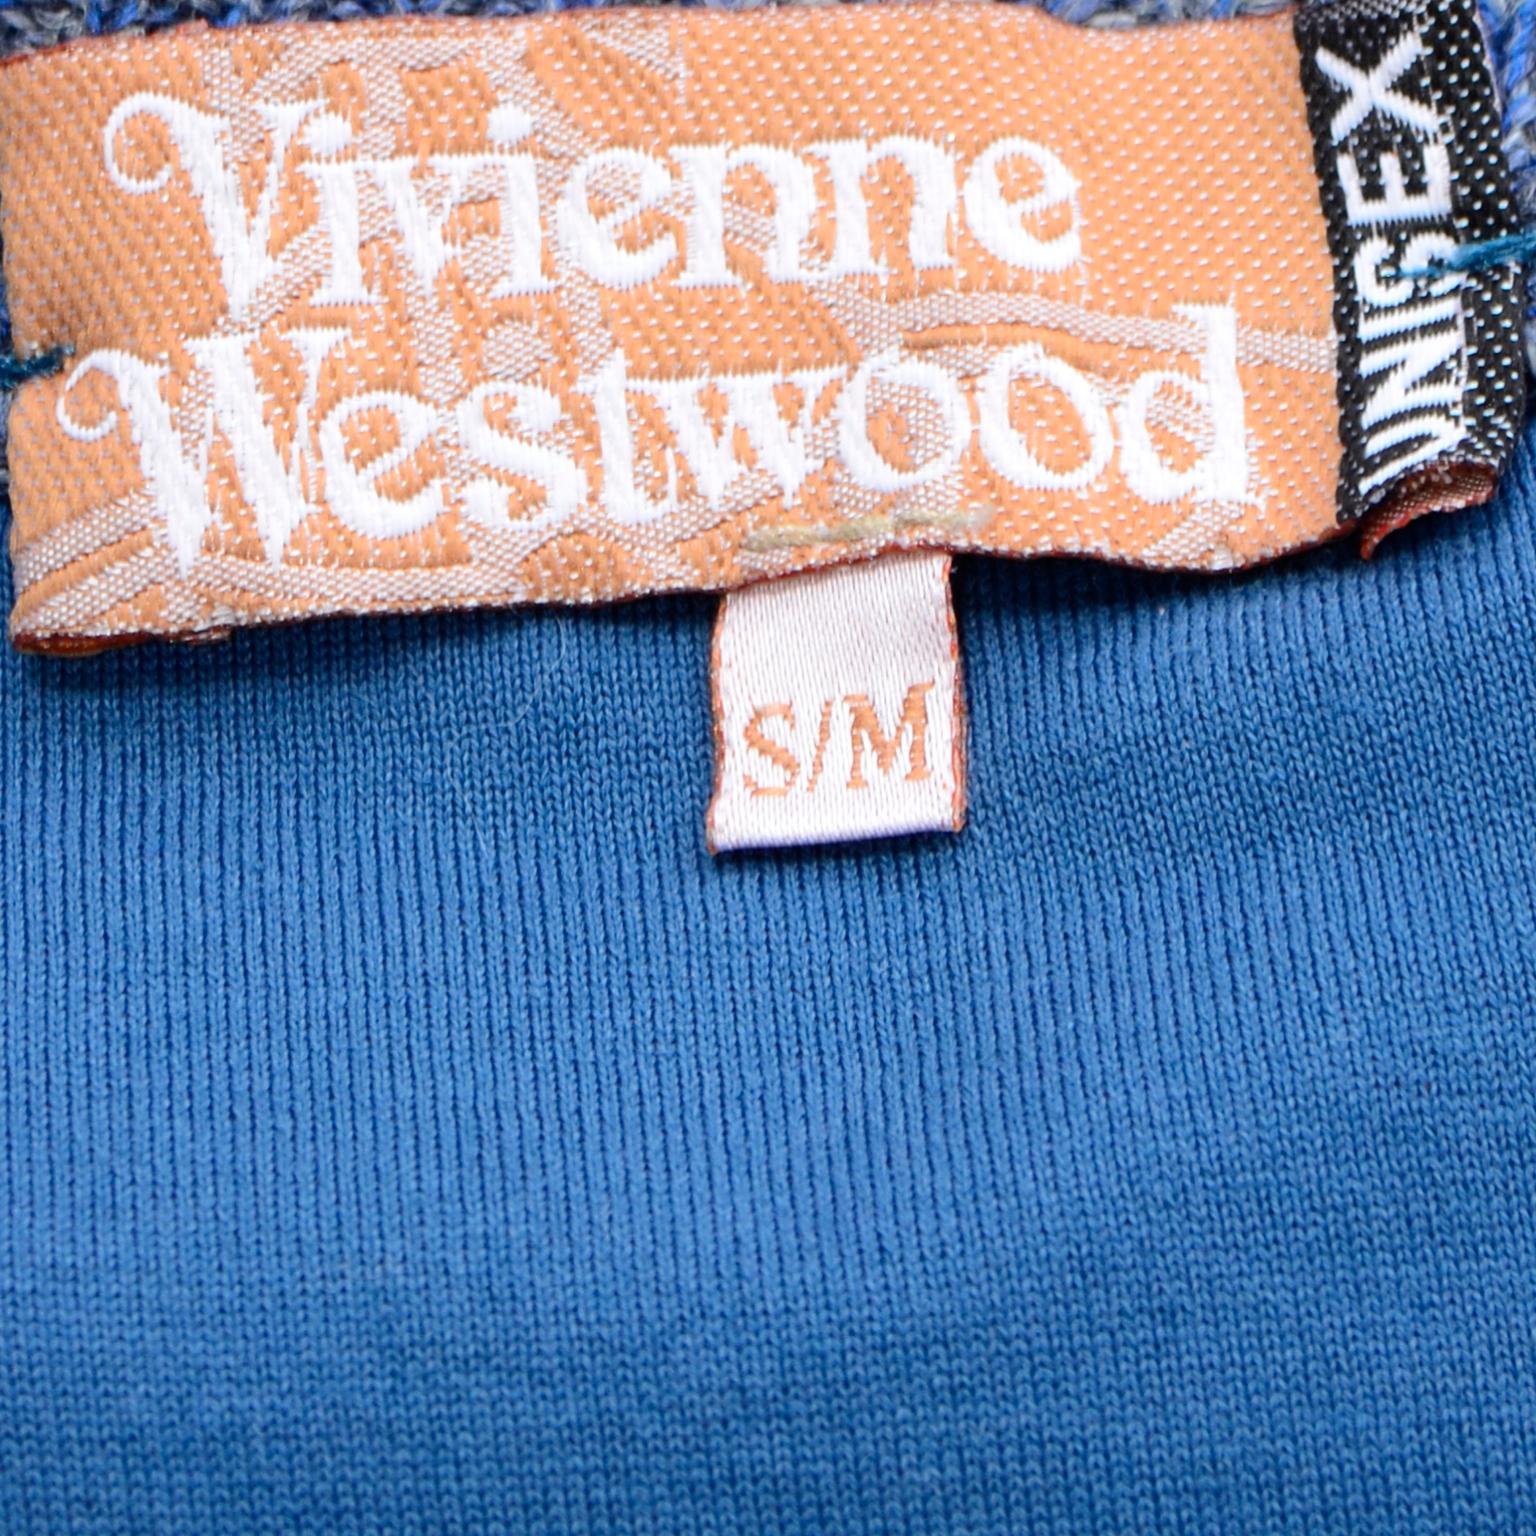 Vivienne Westwood Blue Securite Time for Change Unisex Terry Cloth Crochet Dress 4